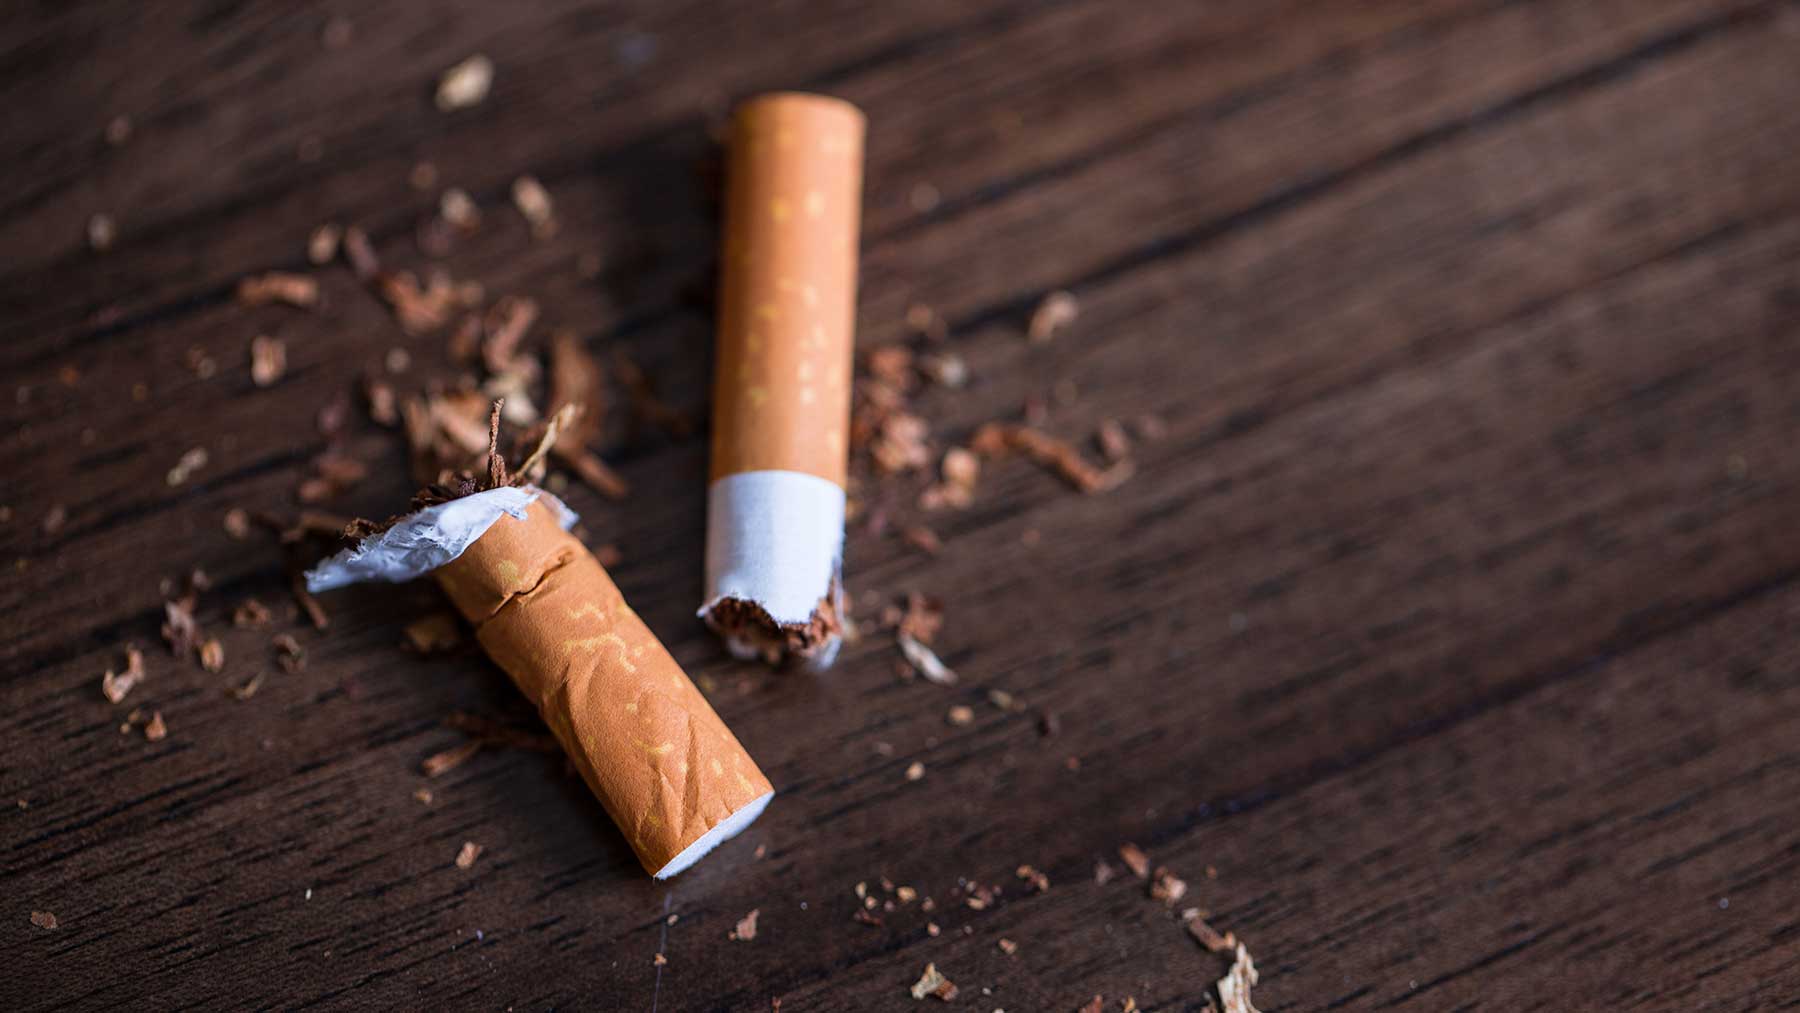 Going nicotine free: Treating nicotine addiction